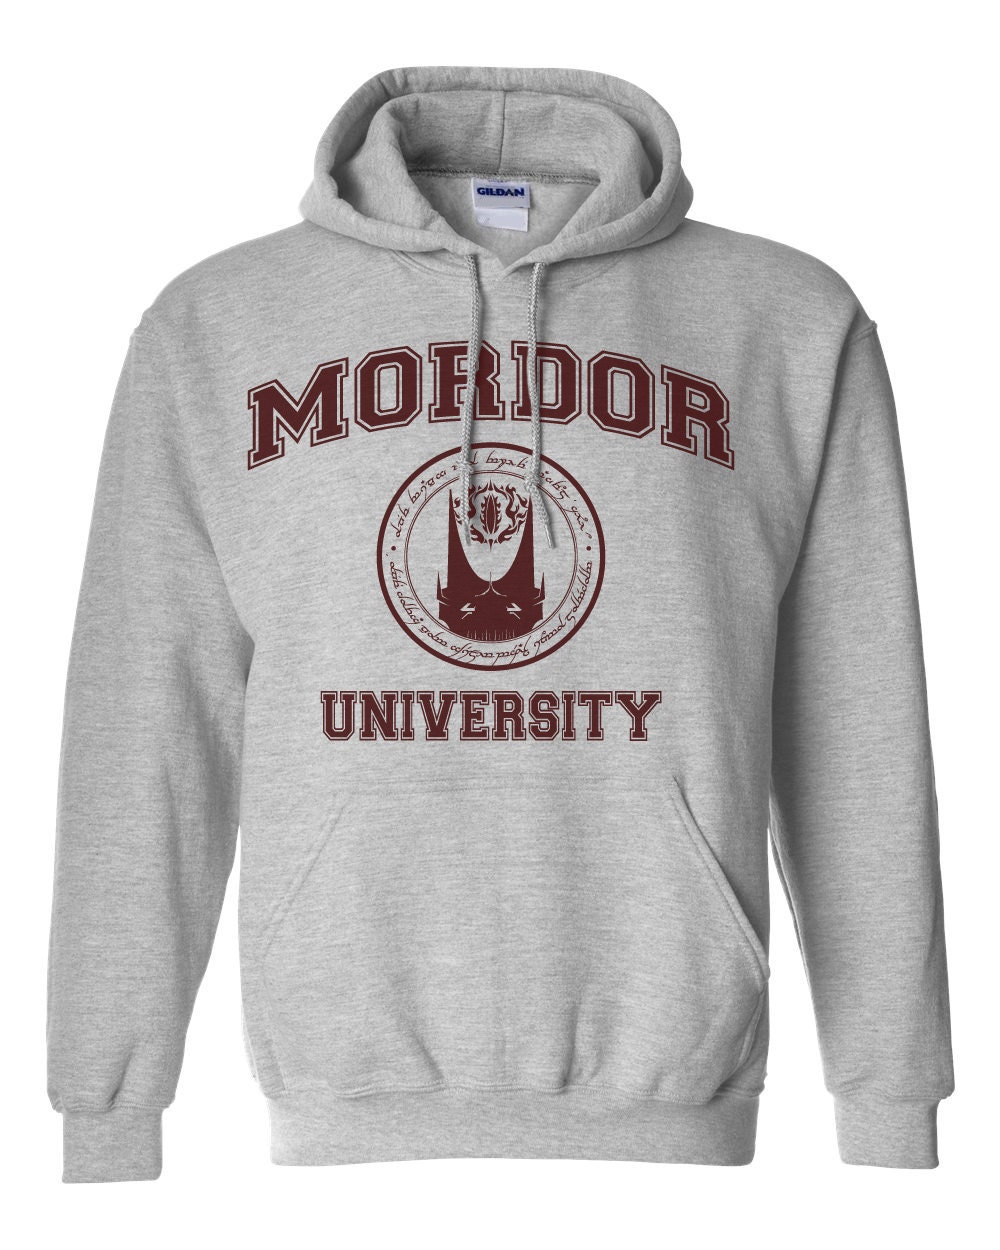 University hoodies font